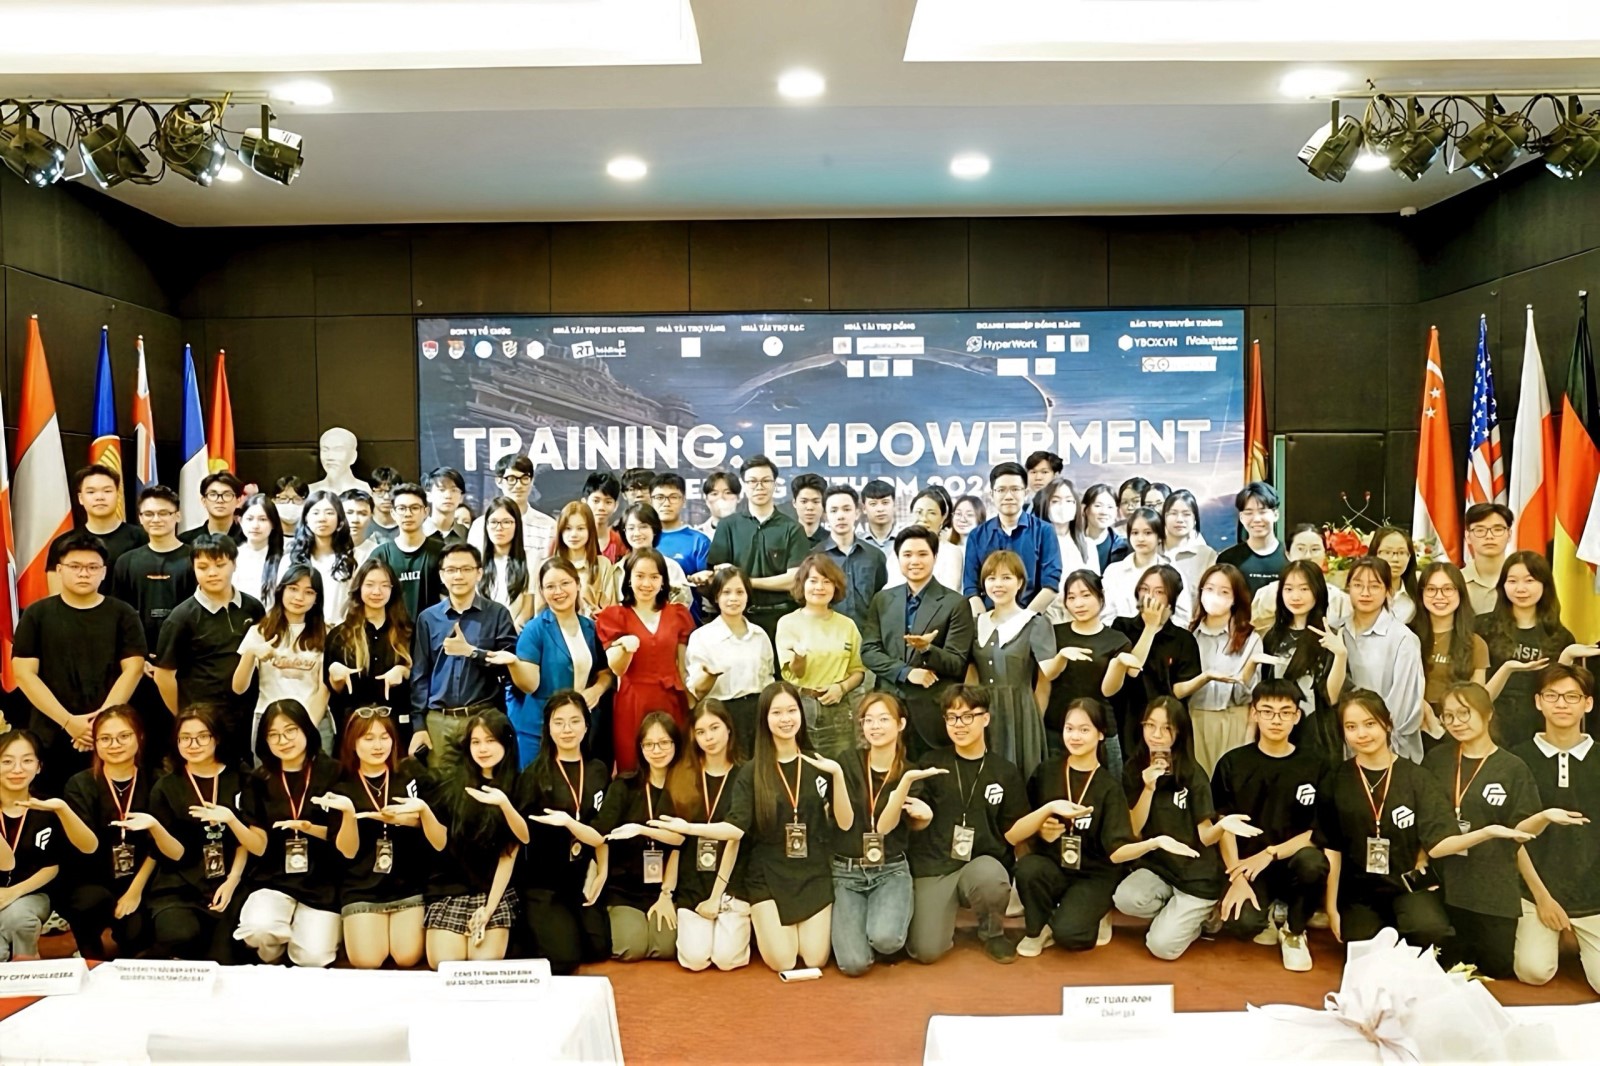 Training “Empowerment”: Nâng tầm hiểu biết